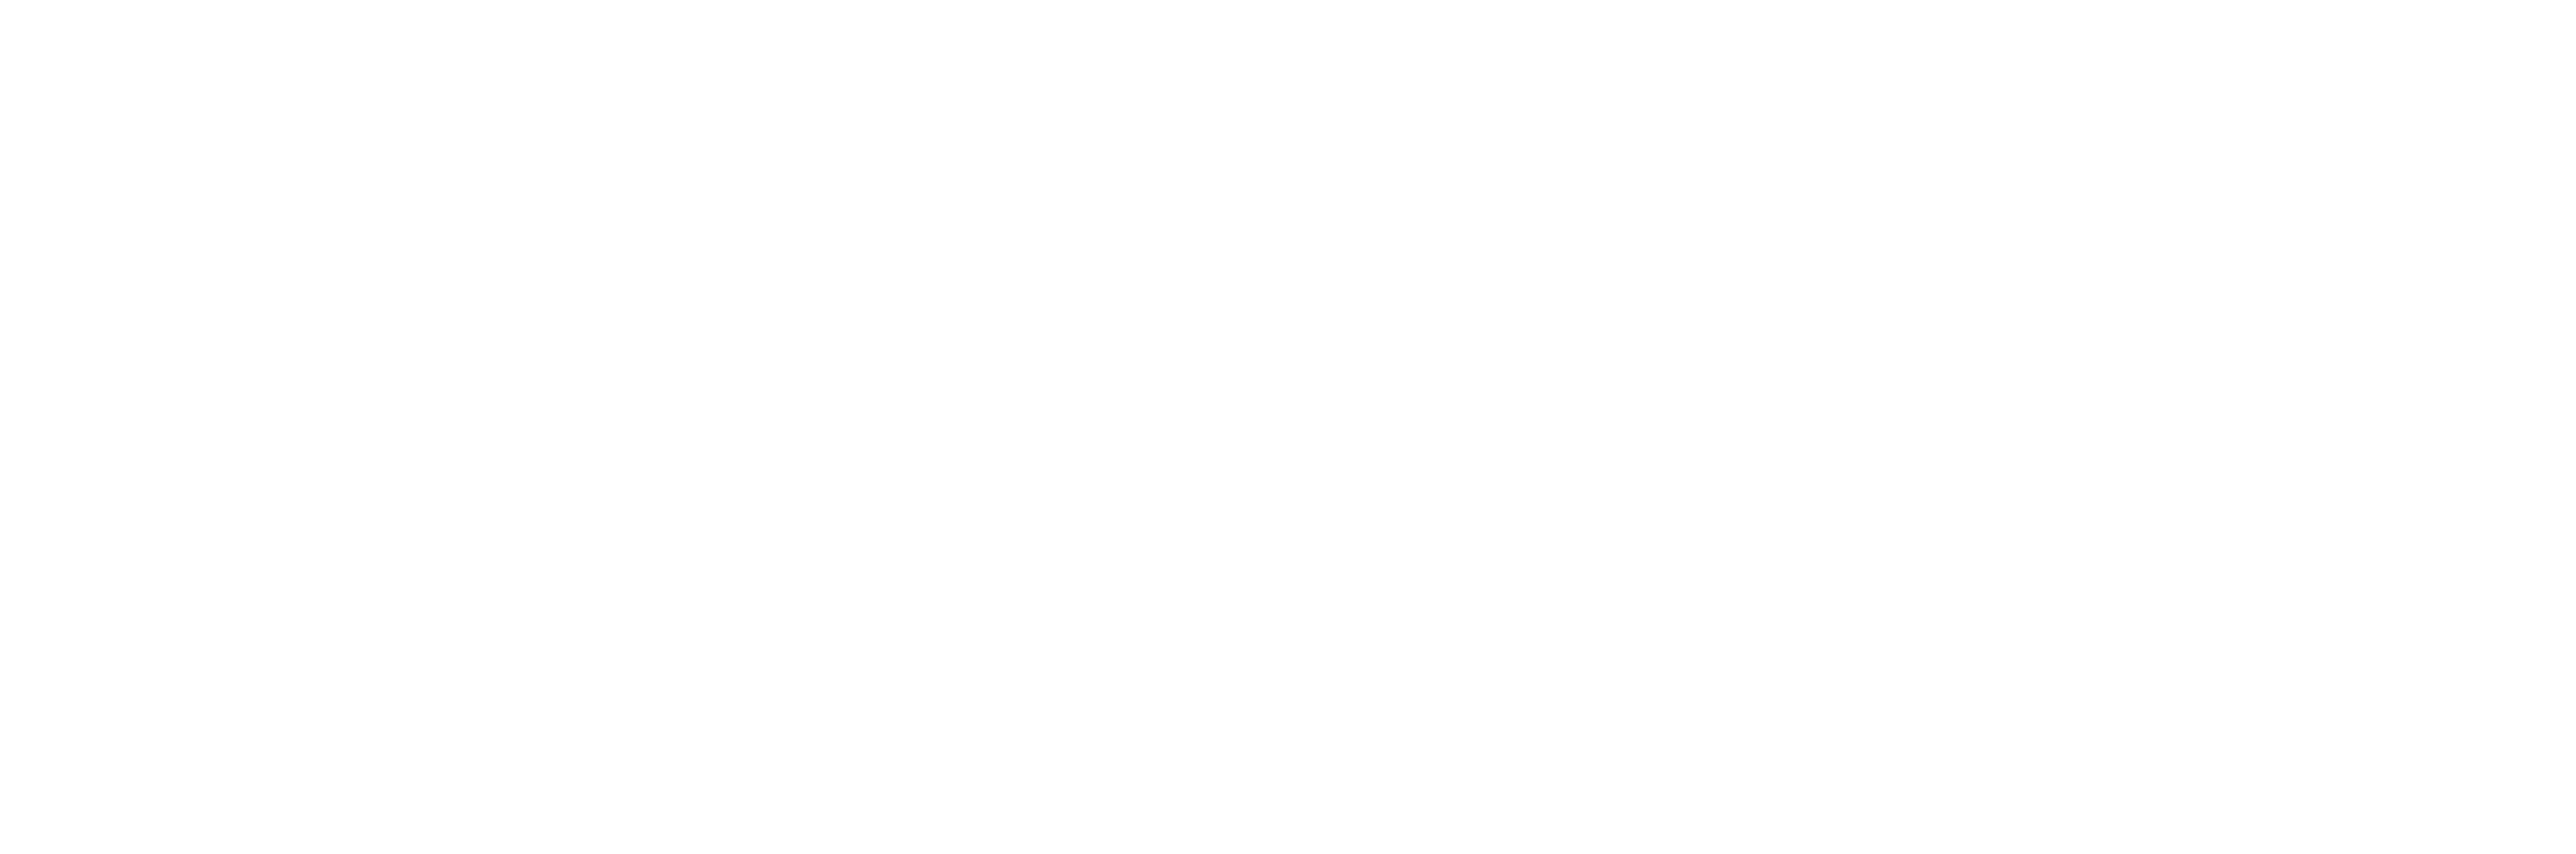 Ancient America Logo